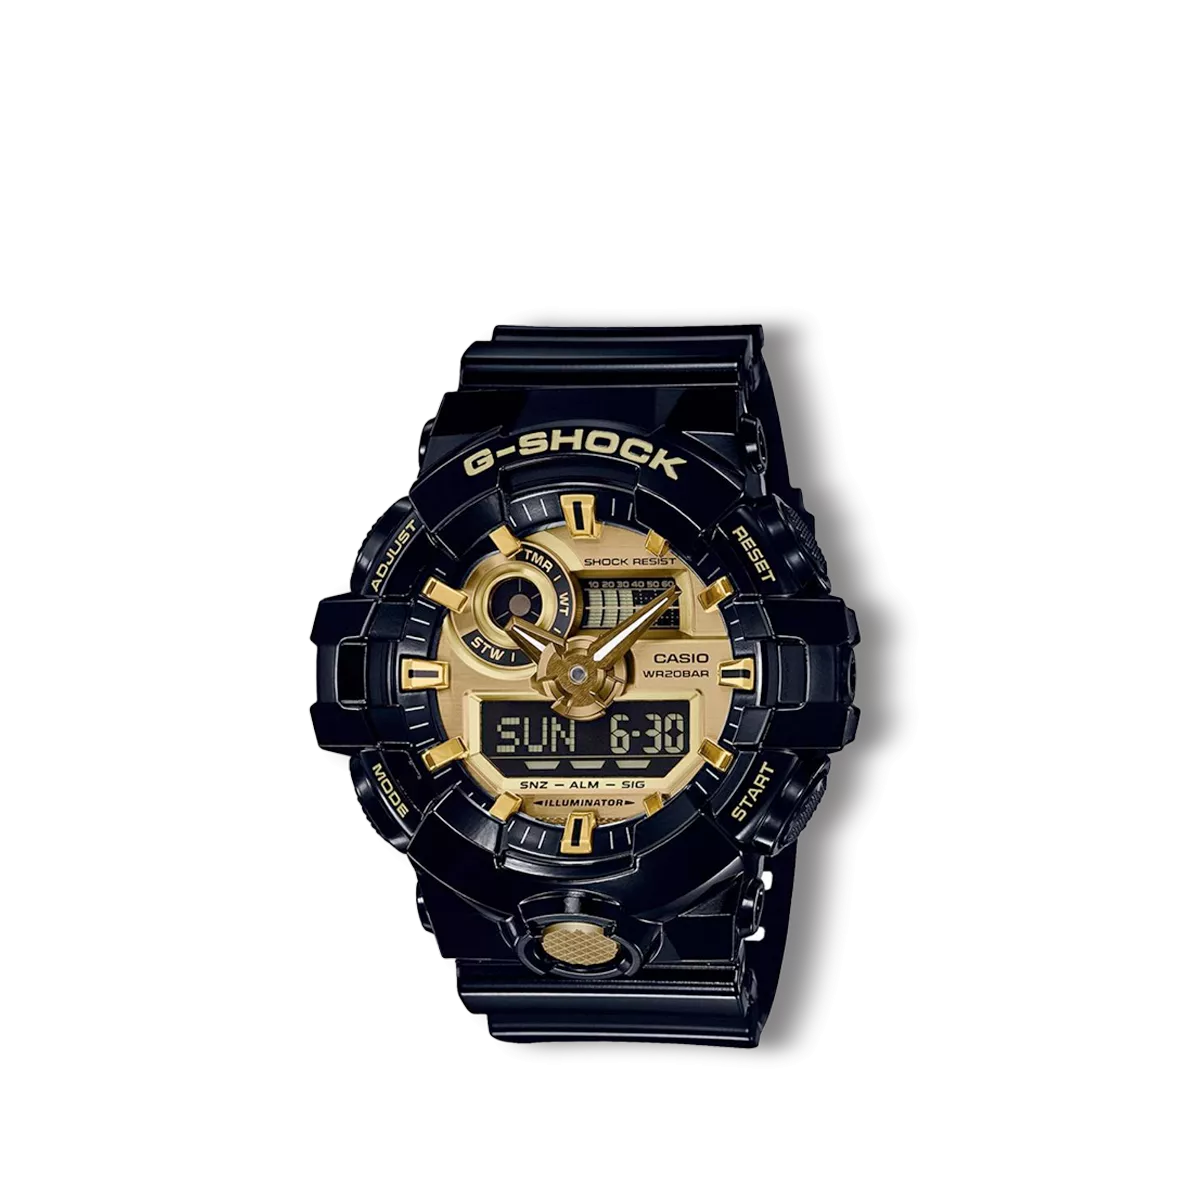 Reloj Casio G-shock